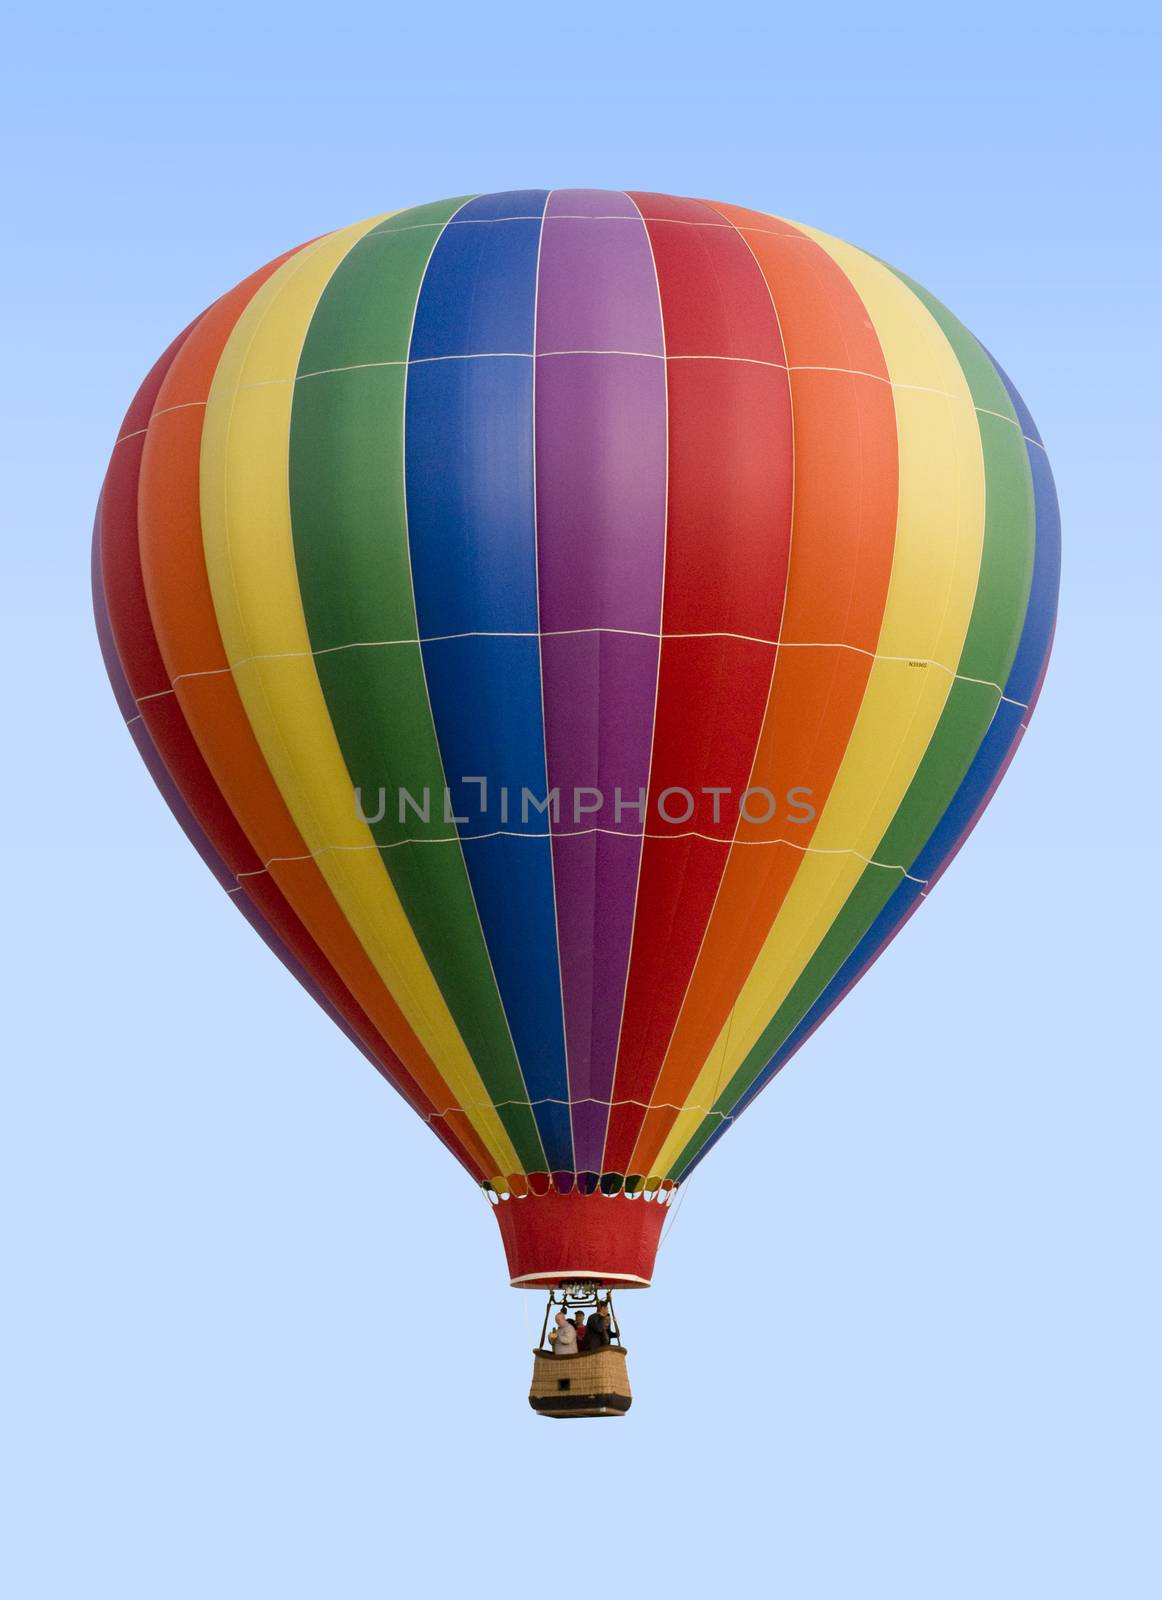 Colorful hot-air balloon against a blue sky